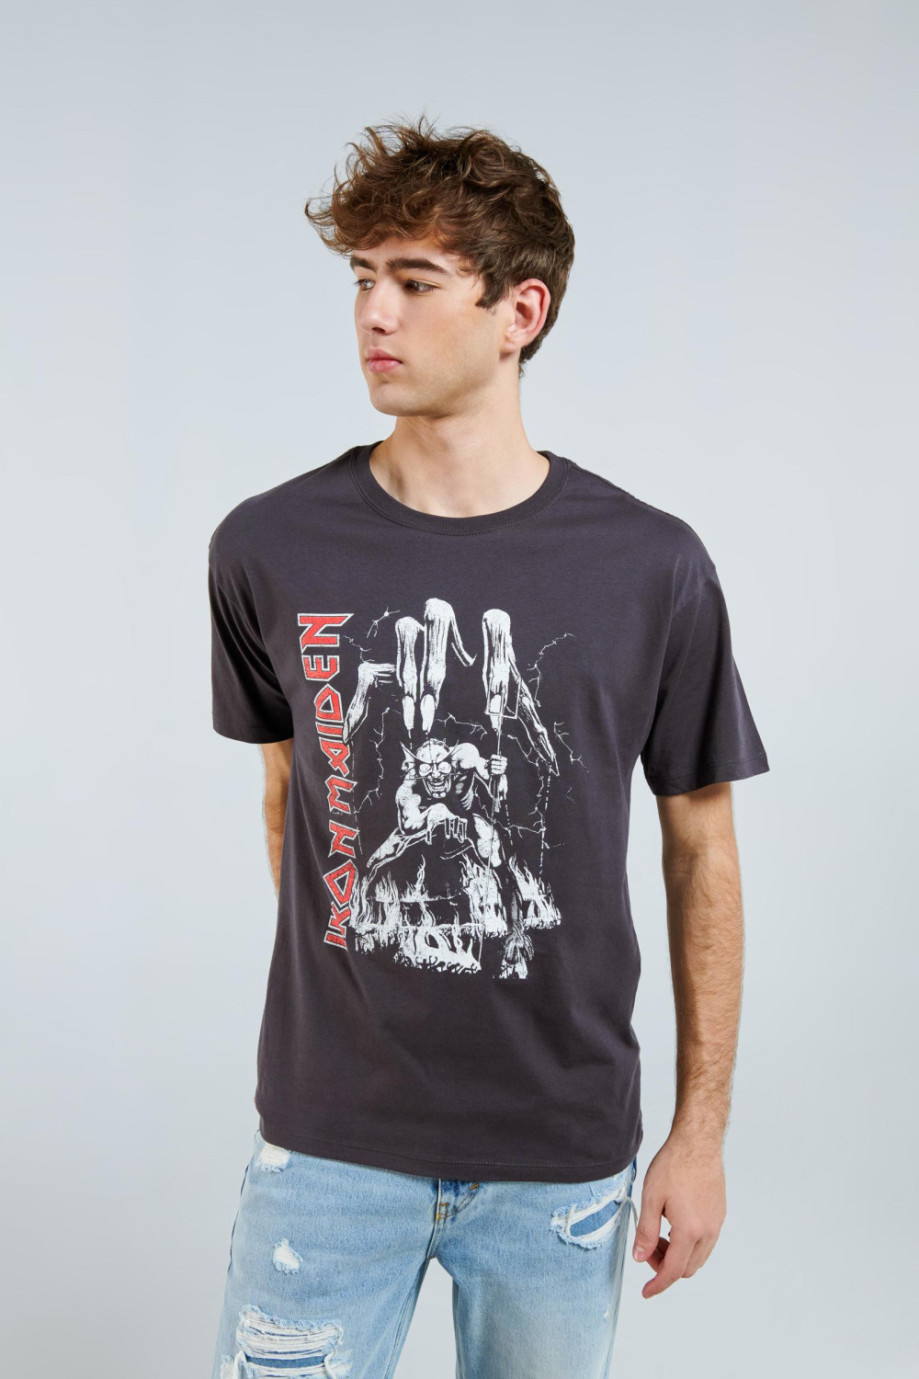 Camiseta gris con diseño de Iron Maiden y manga corta